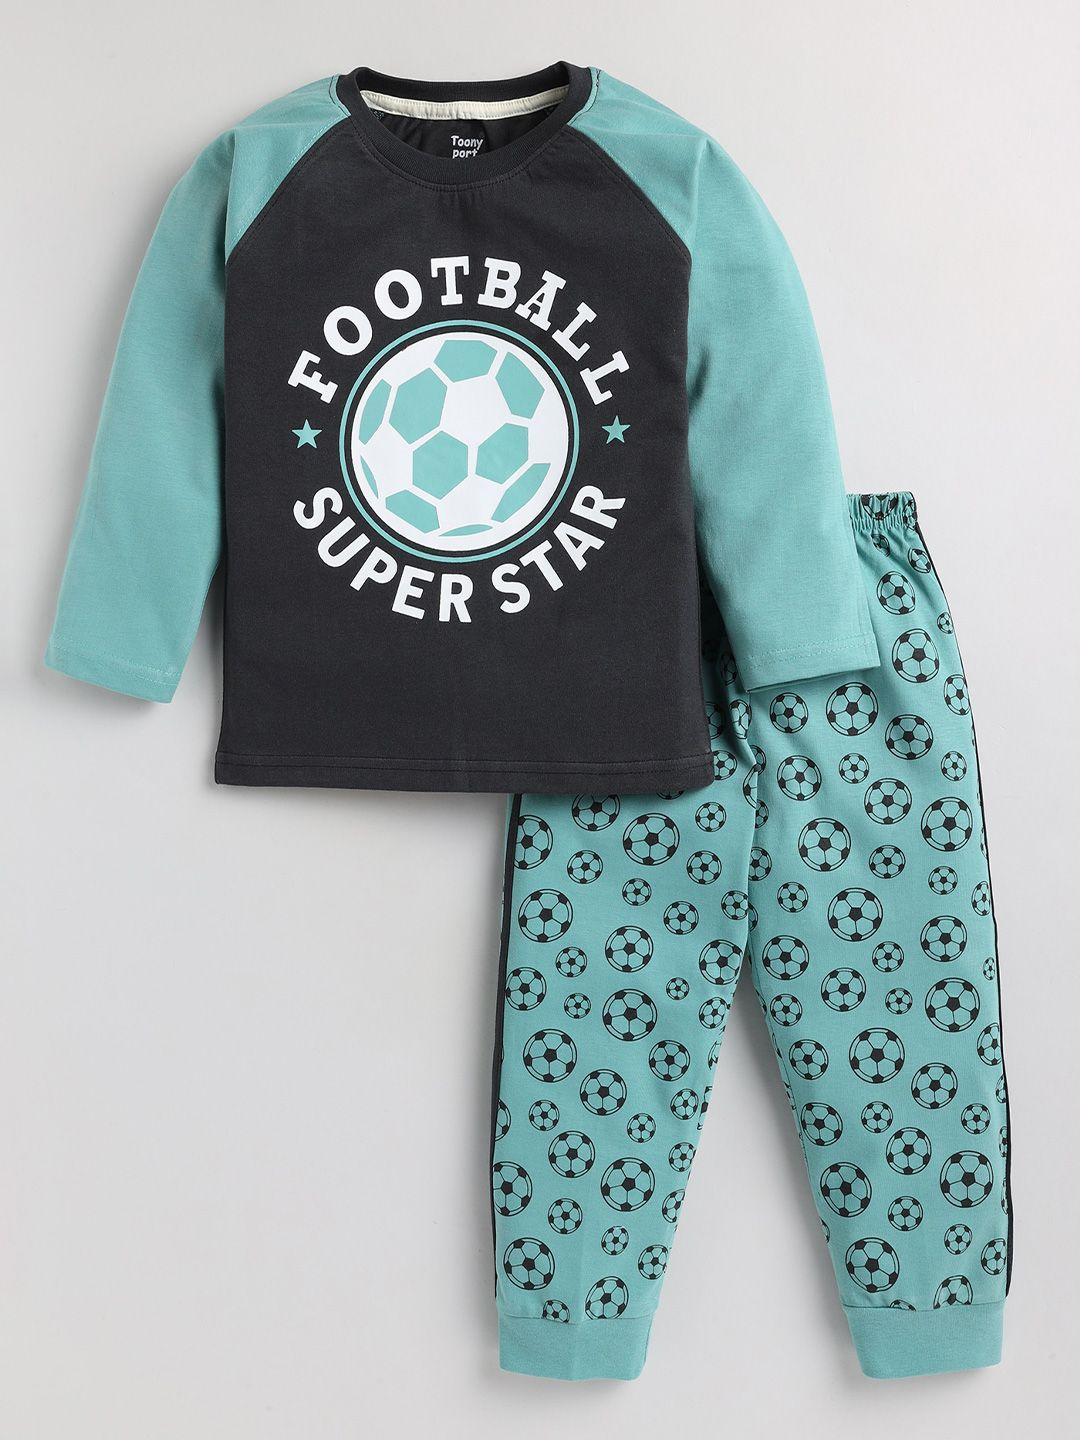 Toonyport Unisex Kids Printed Top with Pyjamas Clothing Set